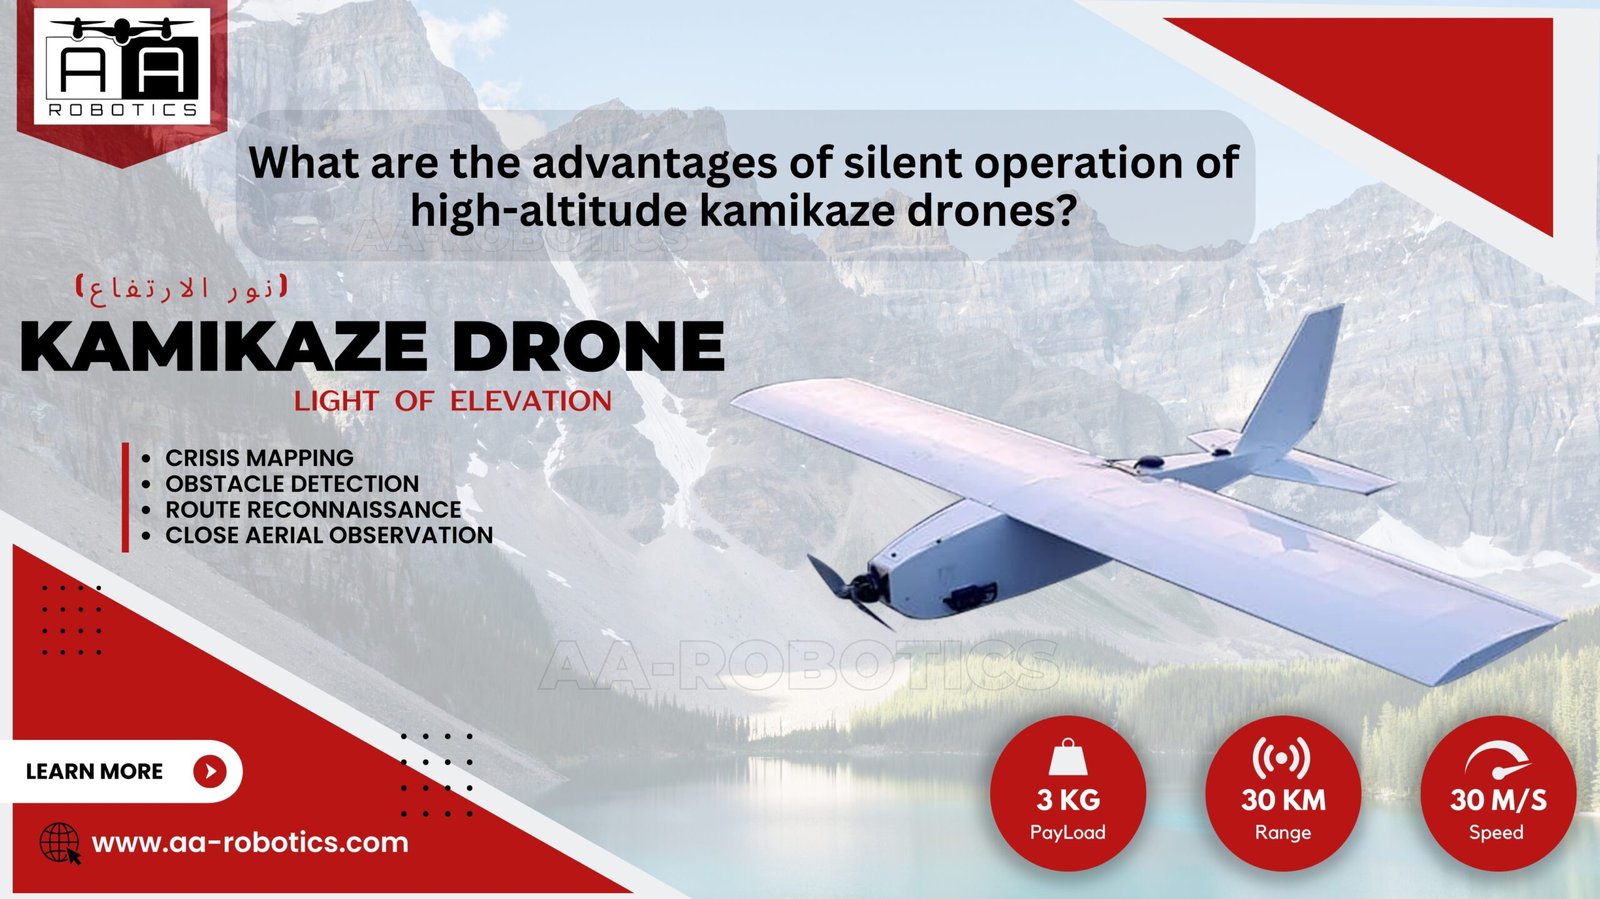 High Altitude Kamikaze Drones Advantages of Silent Operation